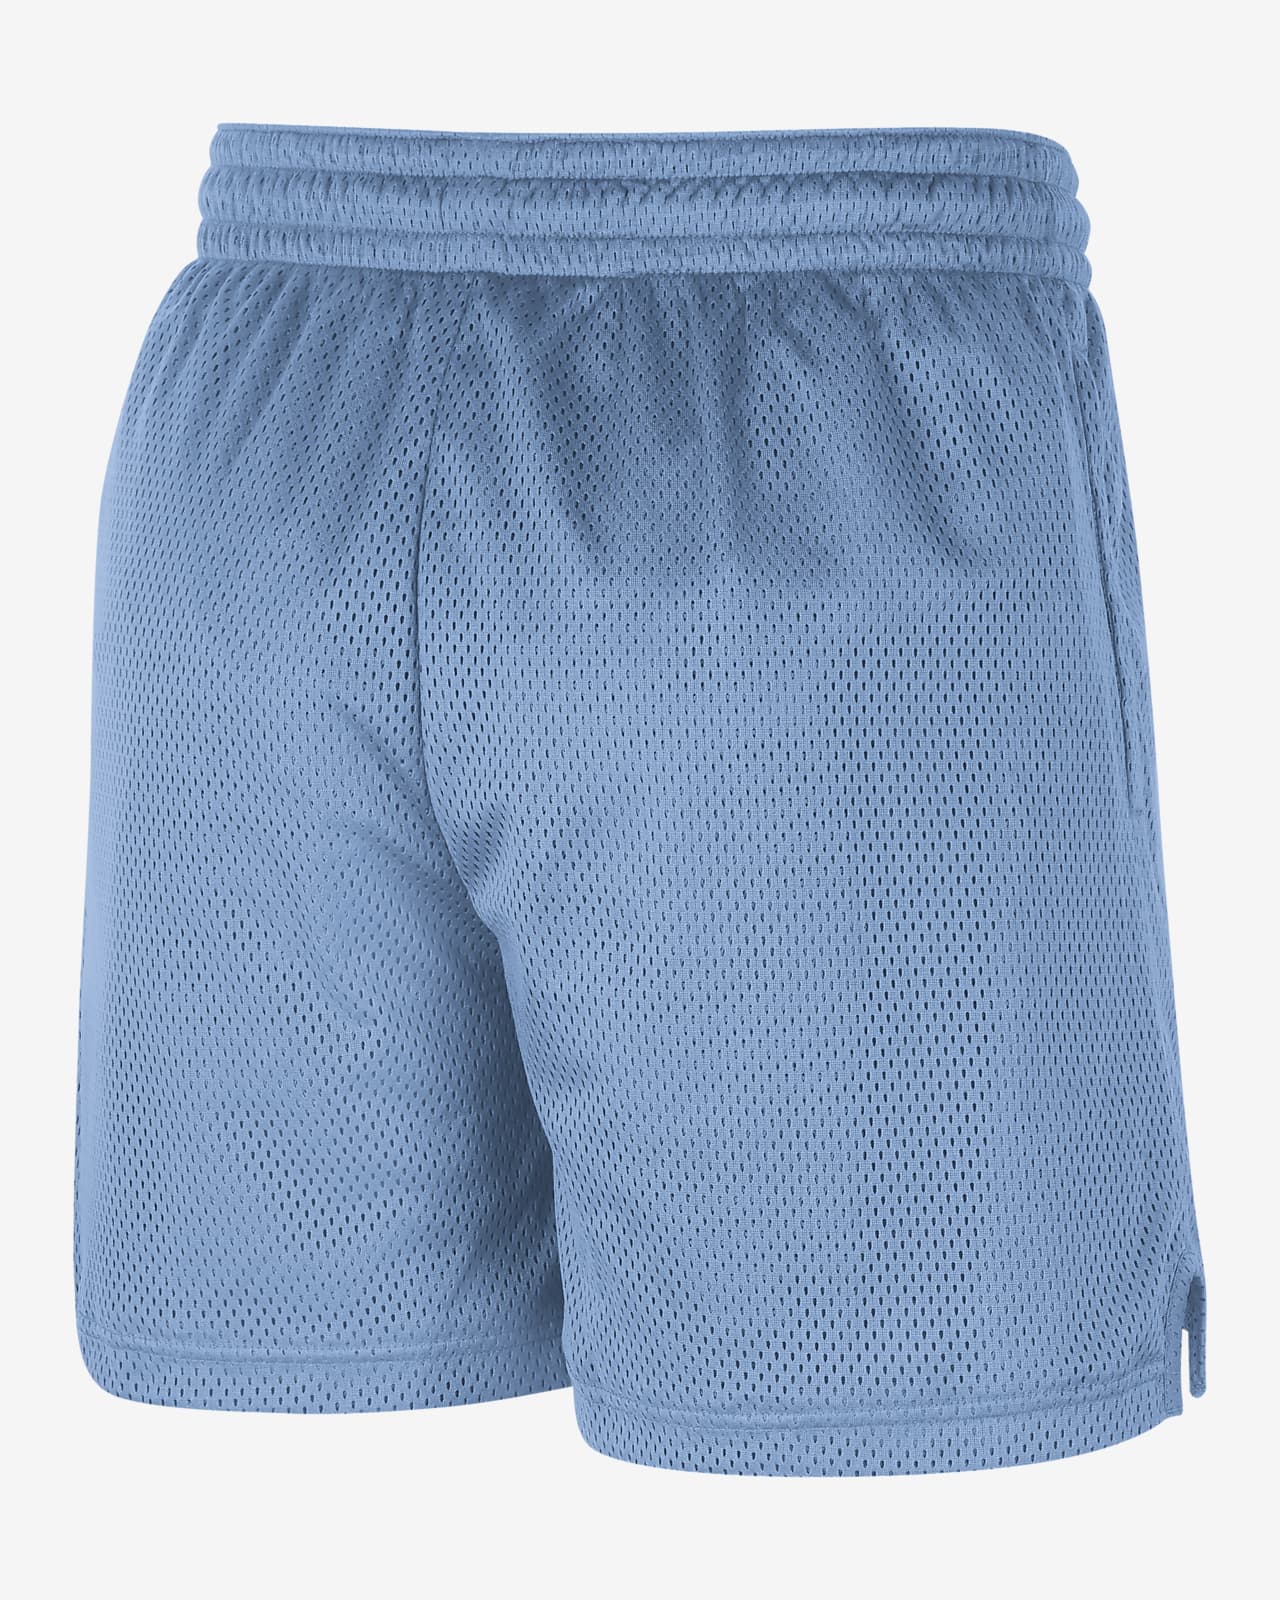 Memphis Grizzlies Men's Nike NBA Shorts. Nike.com